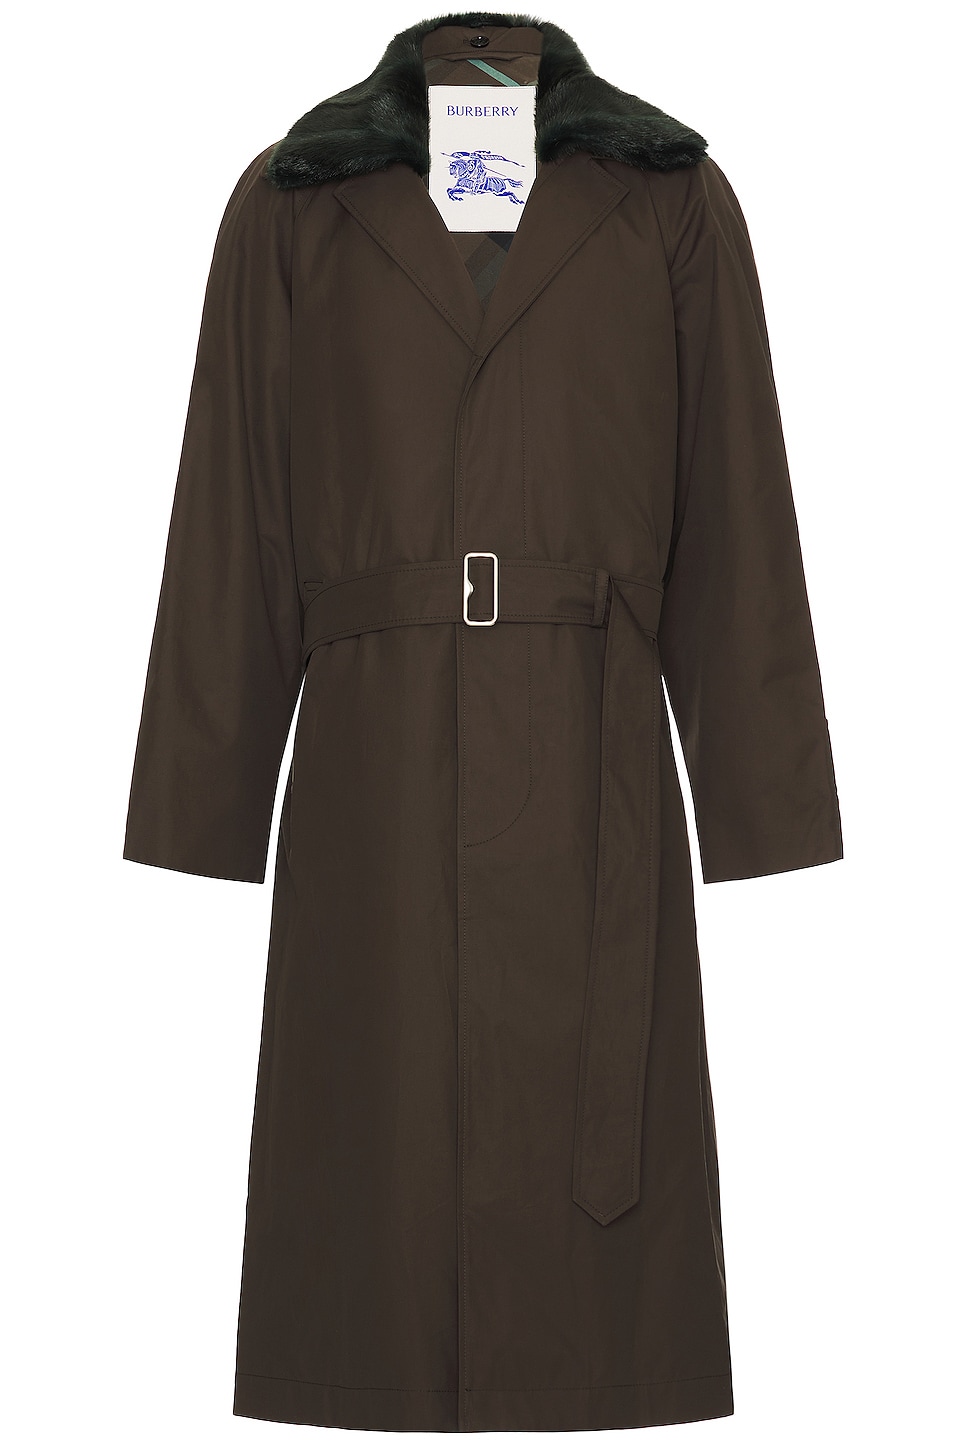 Image 1 of Burberry Overcoat in Otter